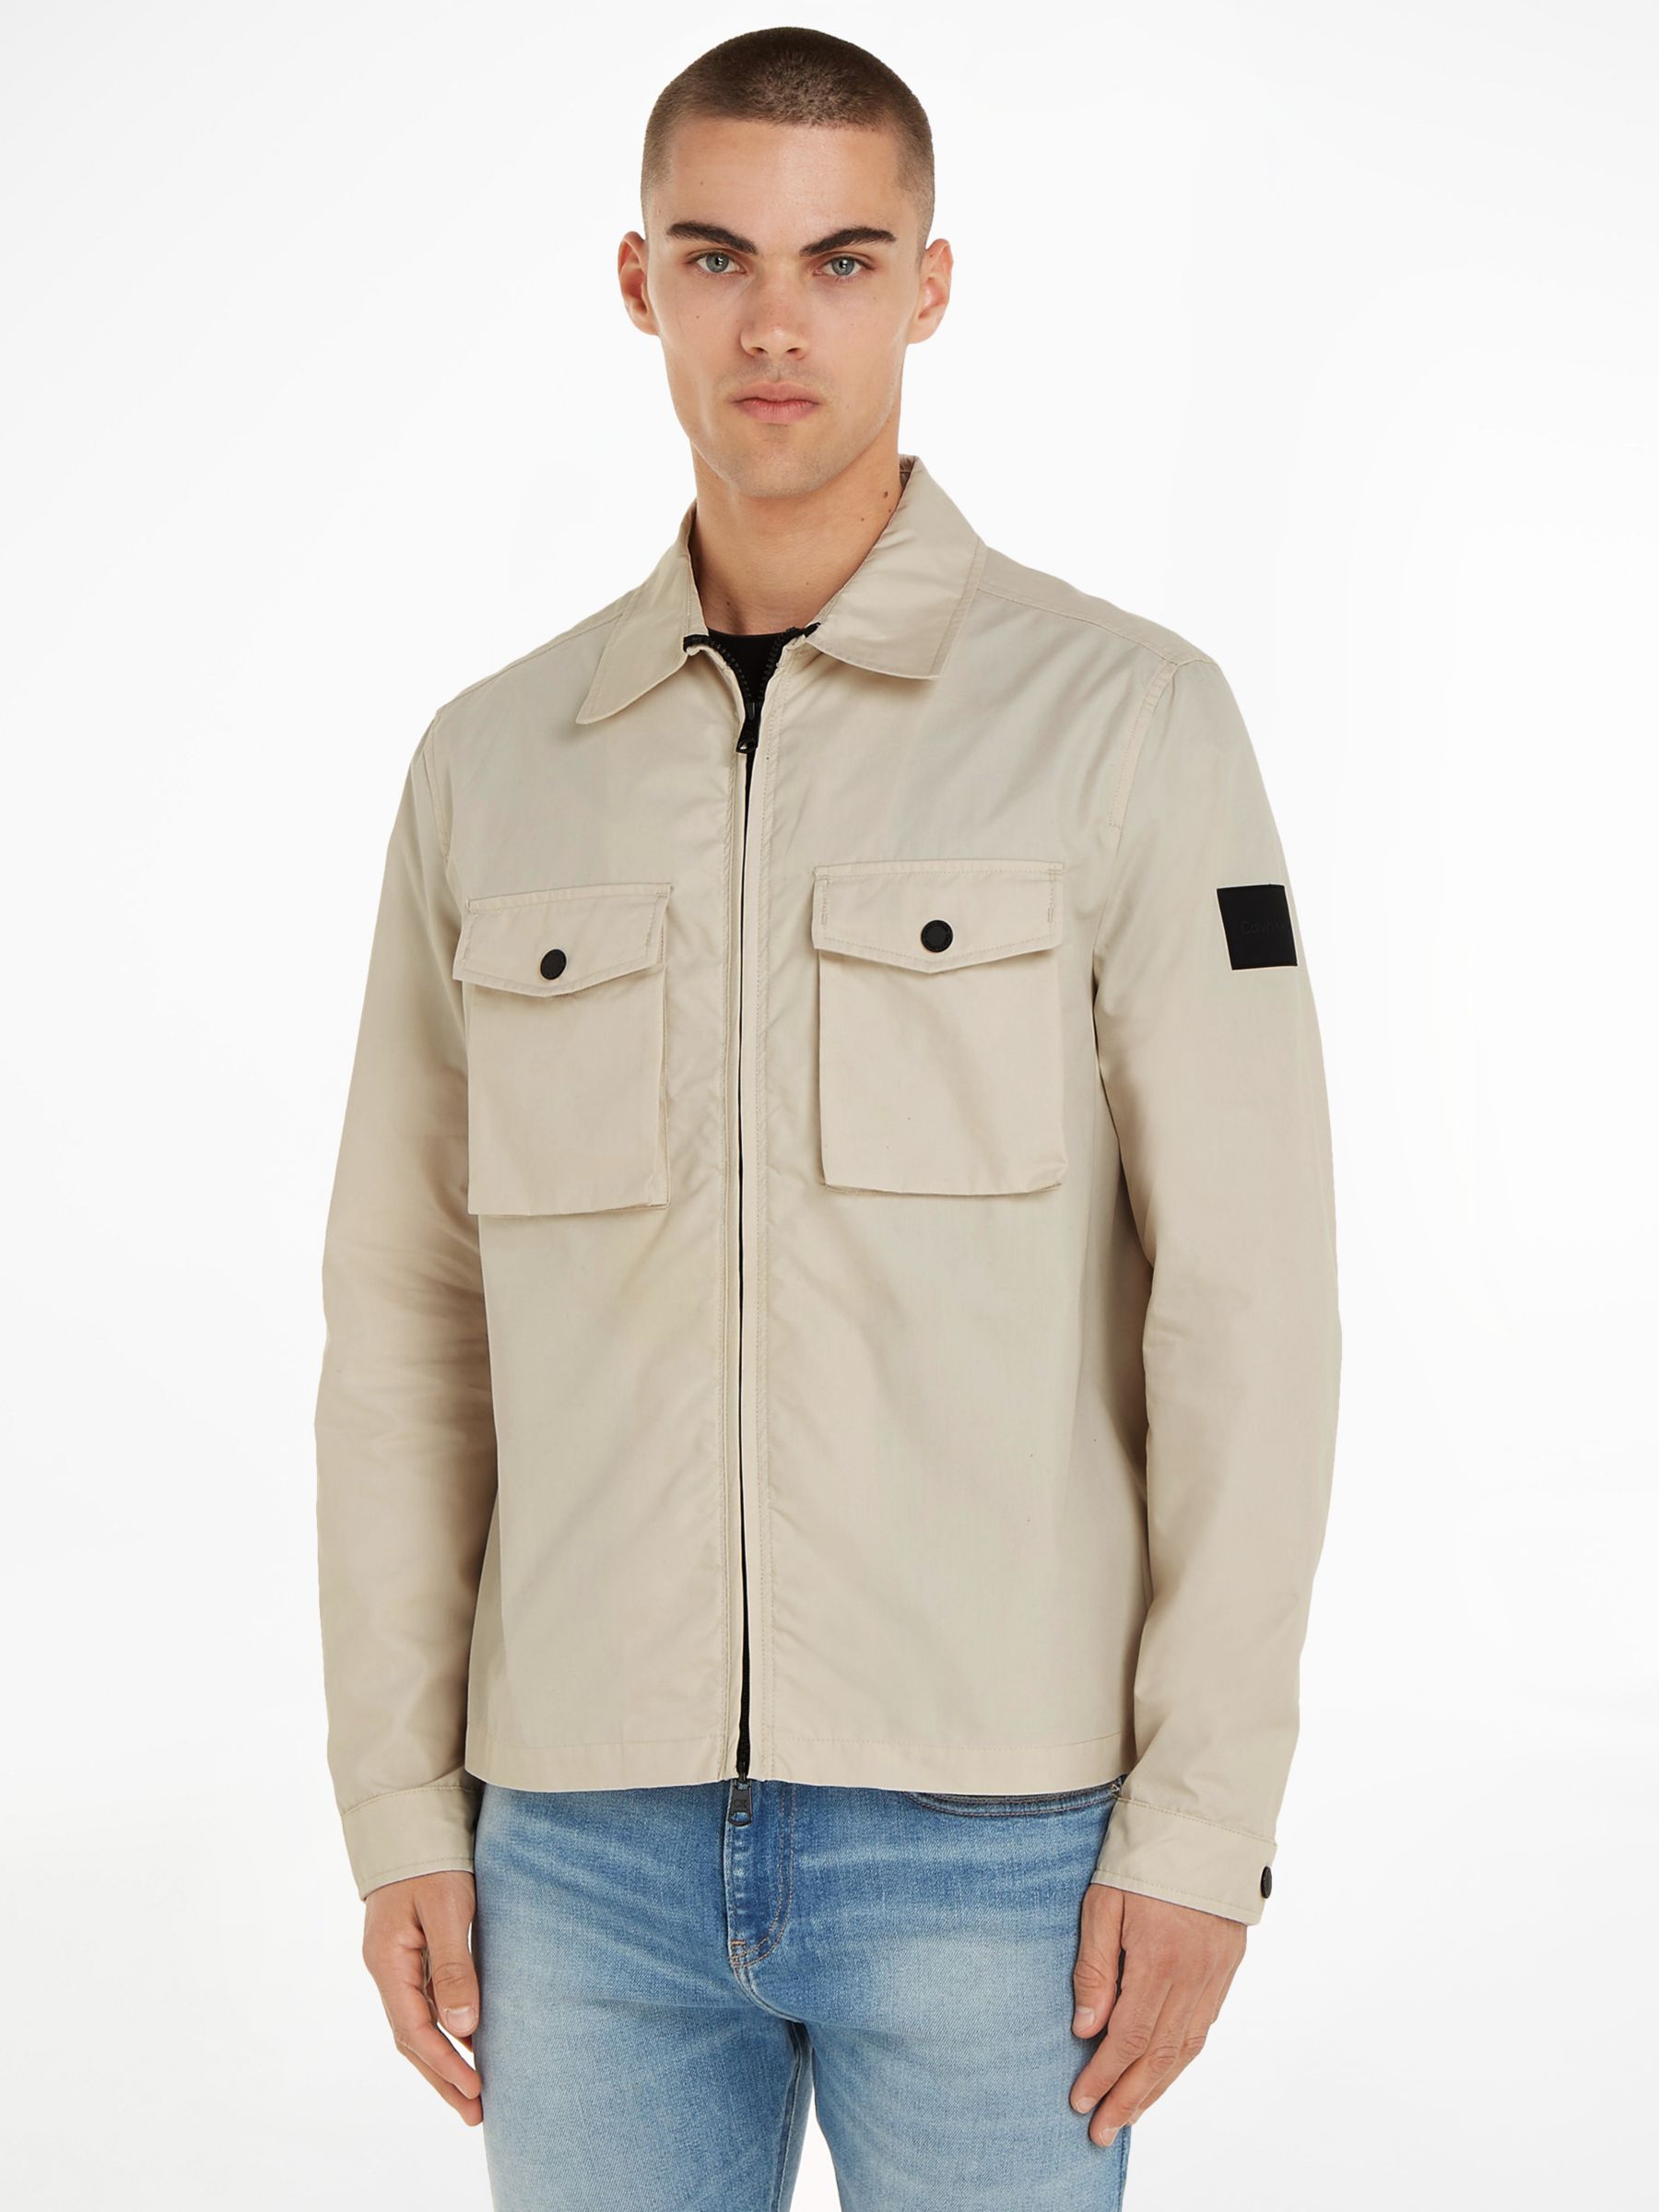 Calvin Klein Recylced Light Shirt Jacket, Stony Beige